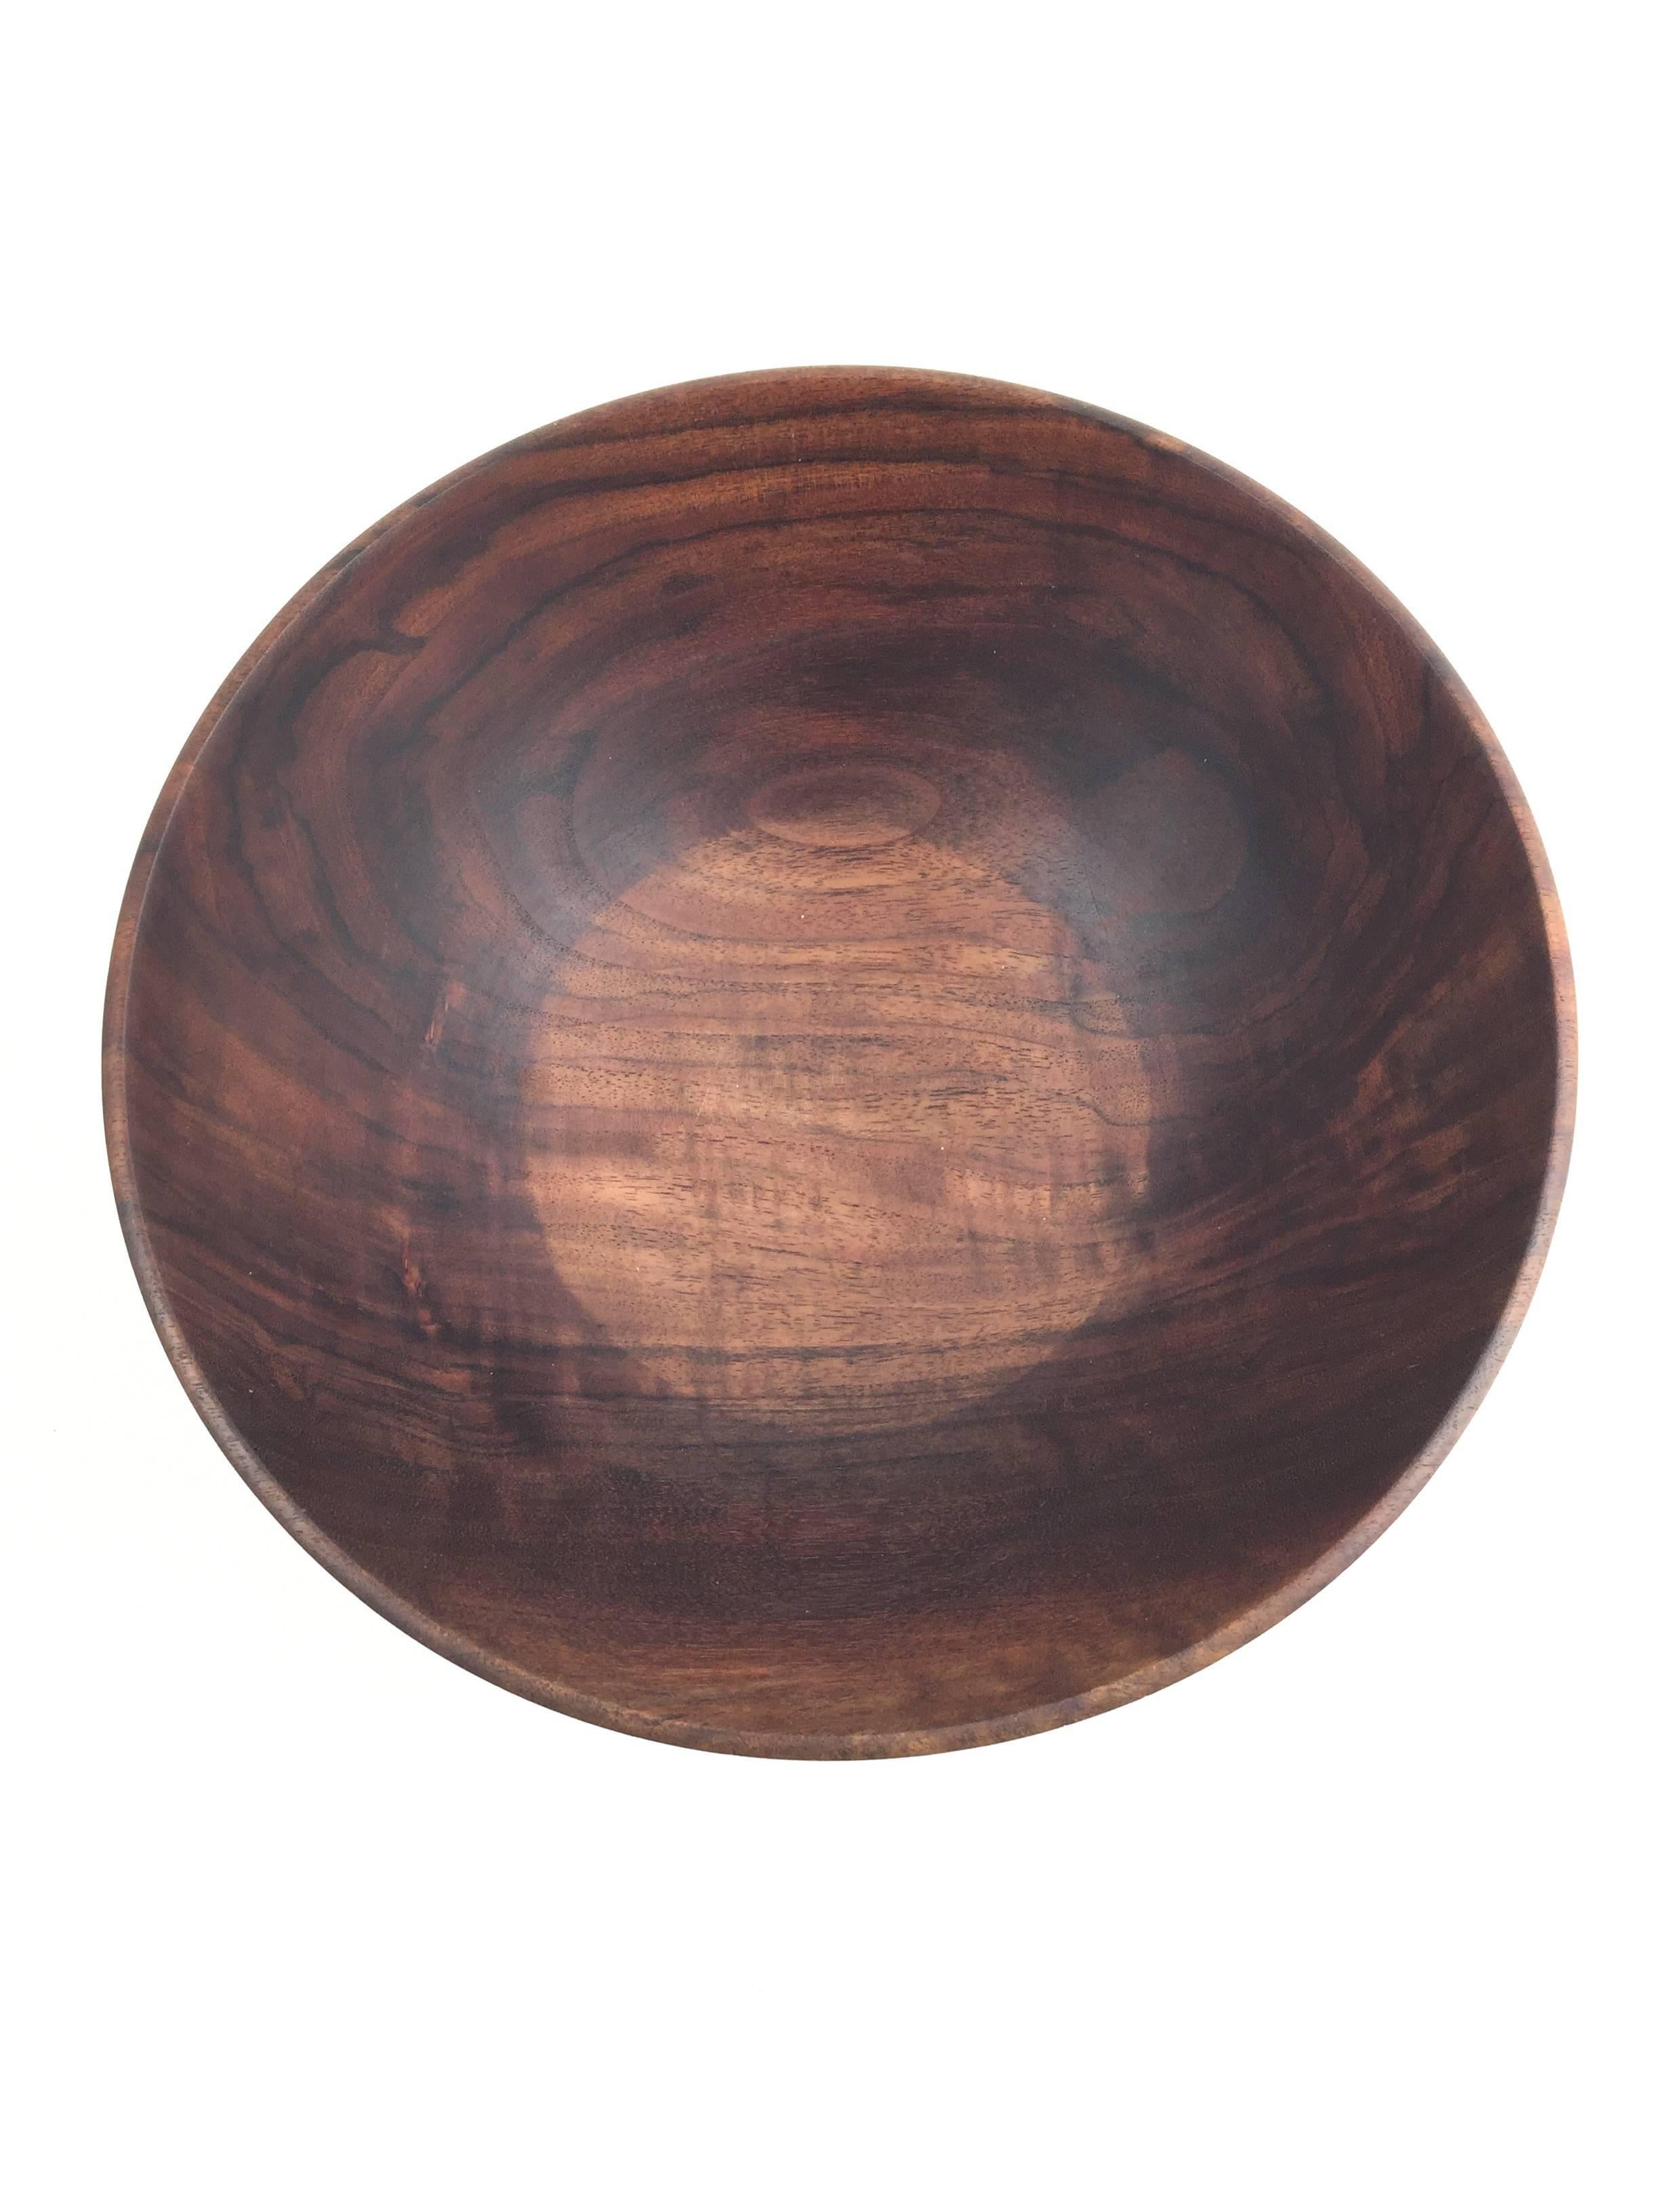 Beautiful large walnut bowl by Bay Area wood turner Bob Stocksdale.